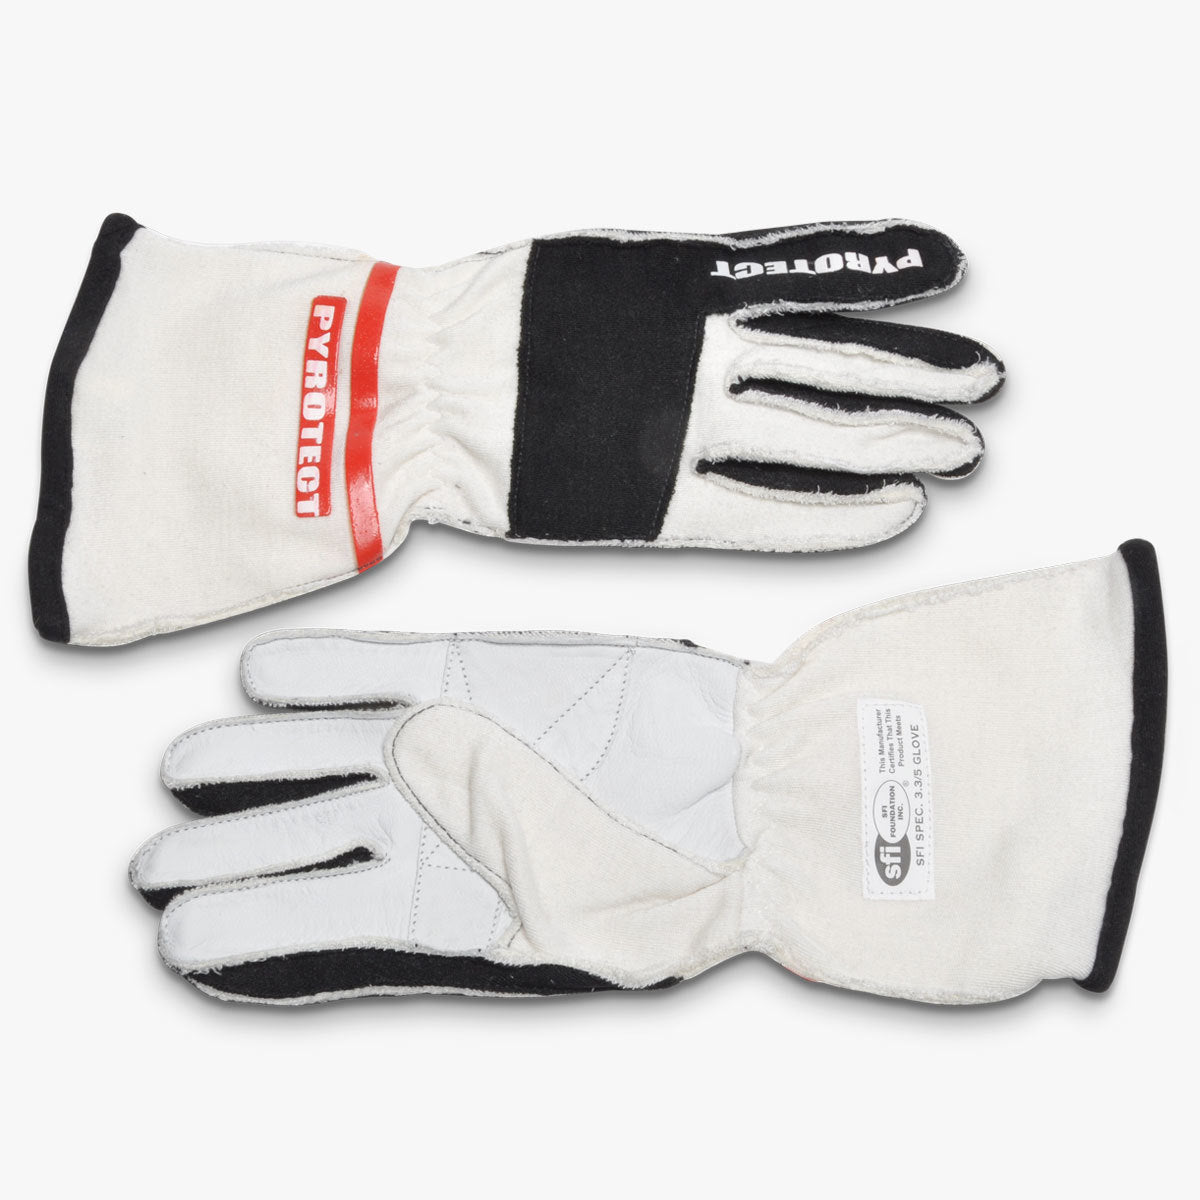 Pyrotect Glove PRO 2 Layer White Medium SFI-5 Safety Clothing Driving Gloves main image